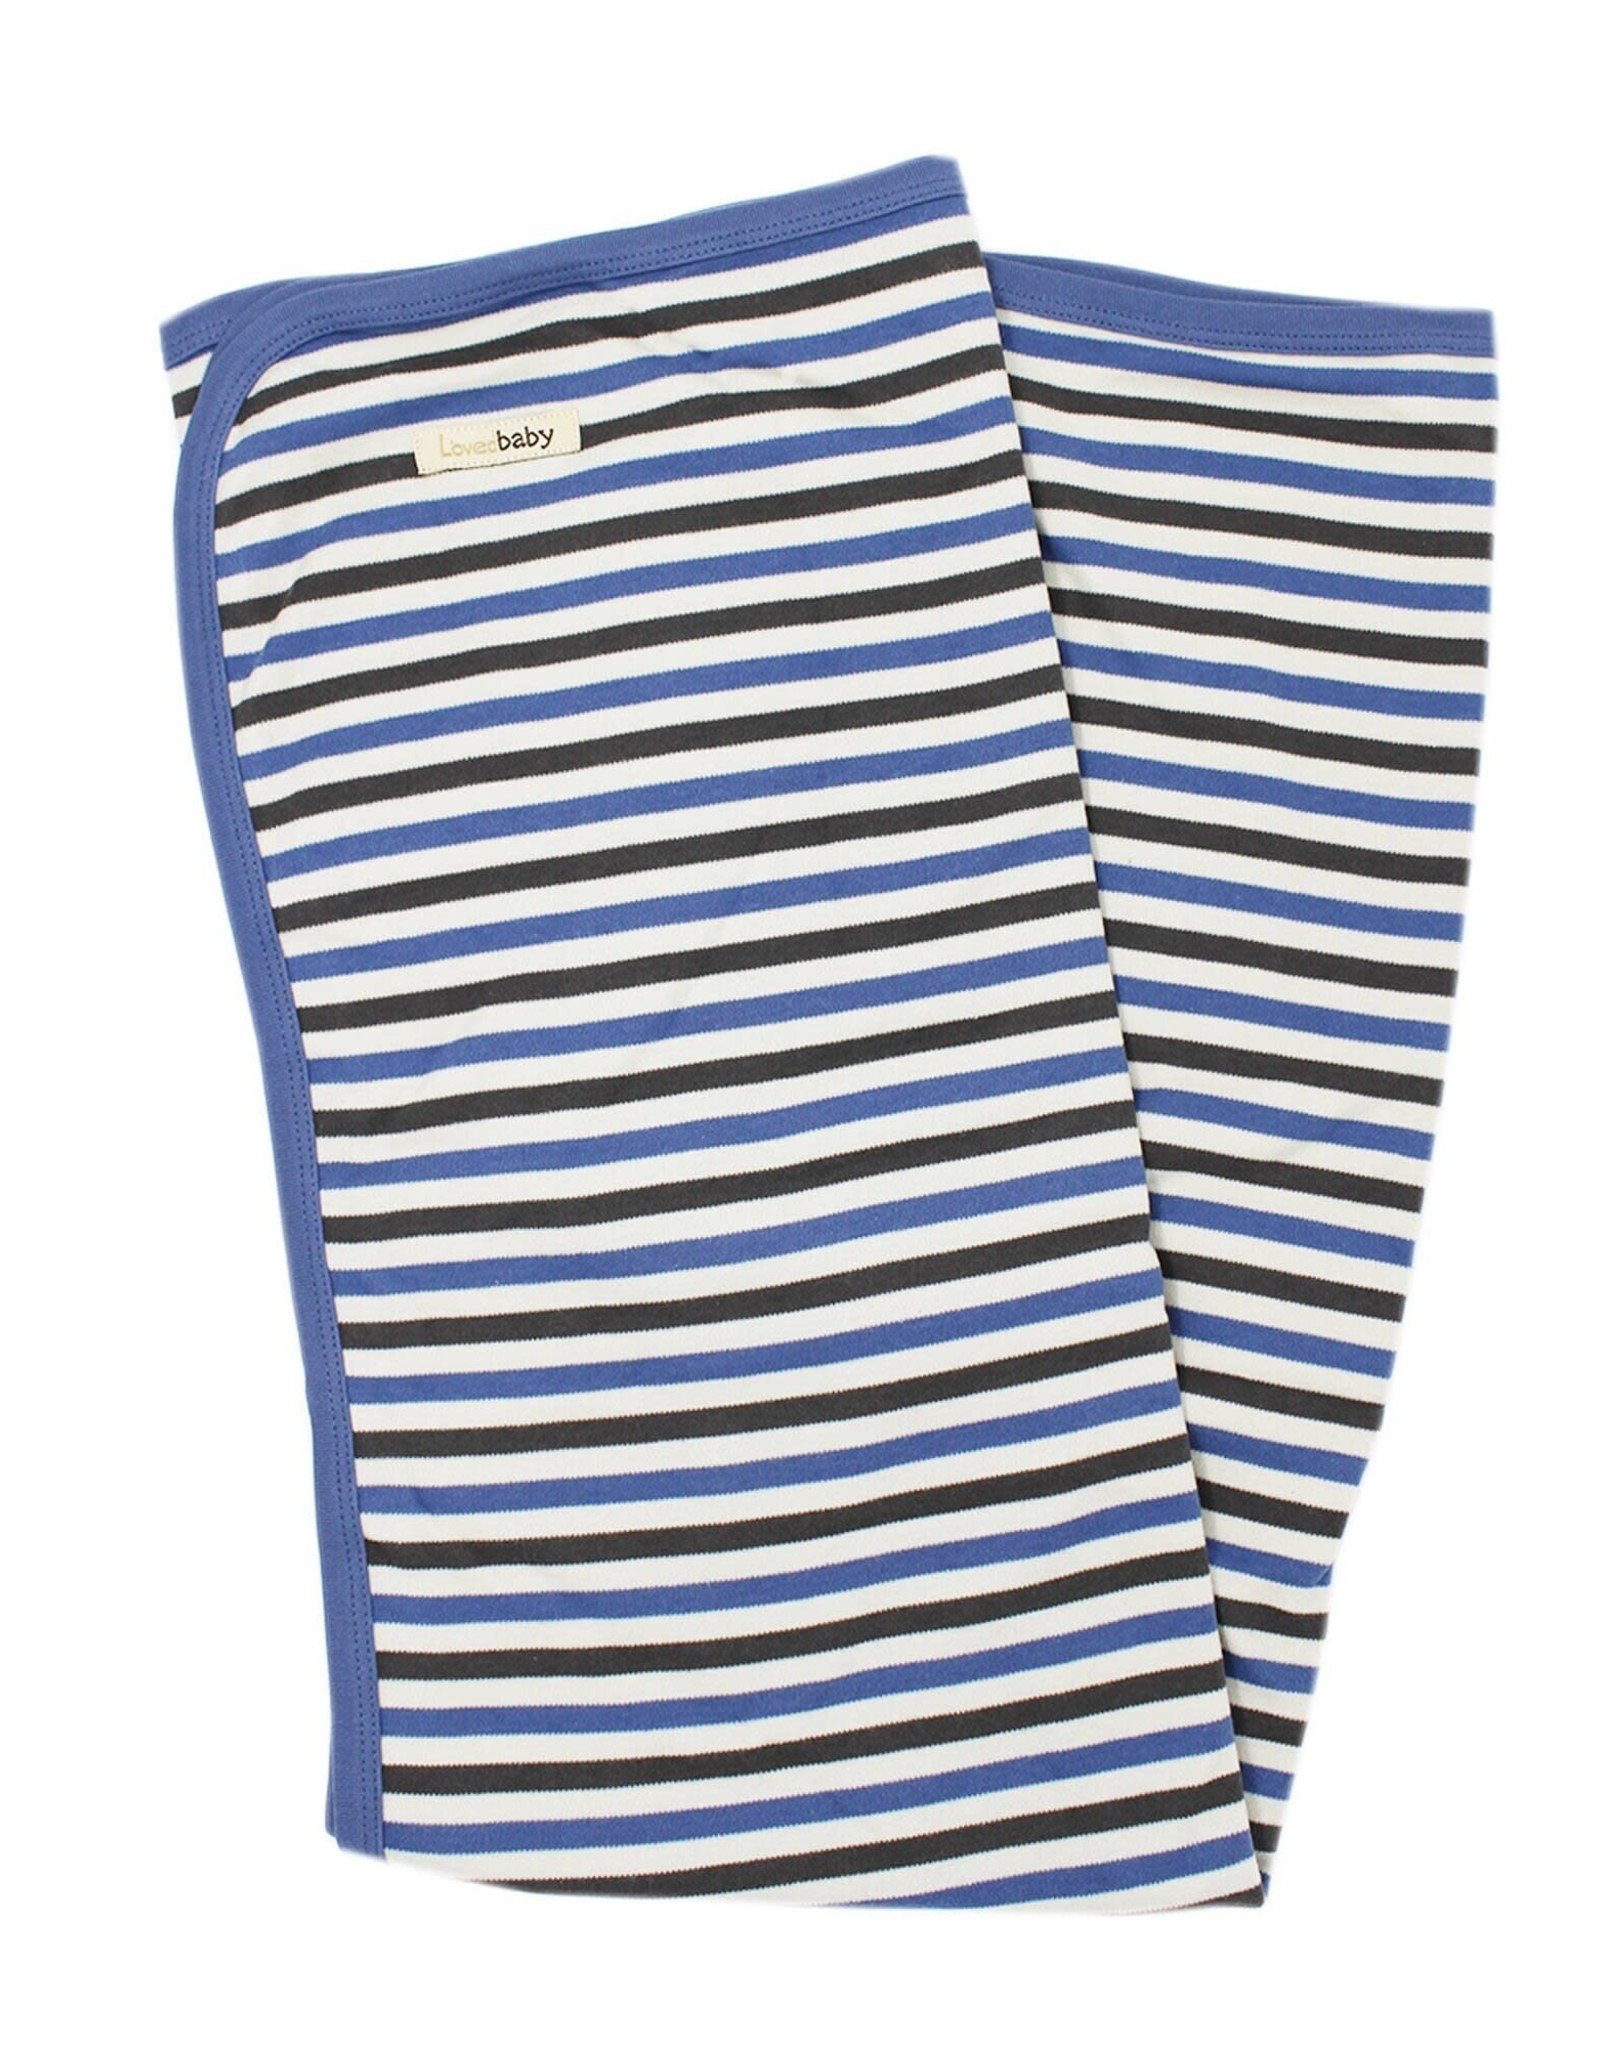 L'oved Baby Organic Stripe Swaddle Blanket- Slate